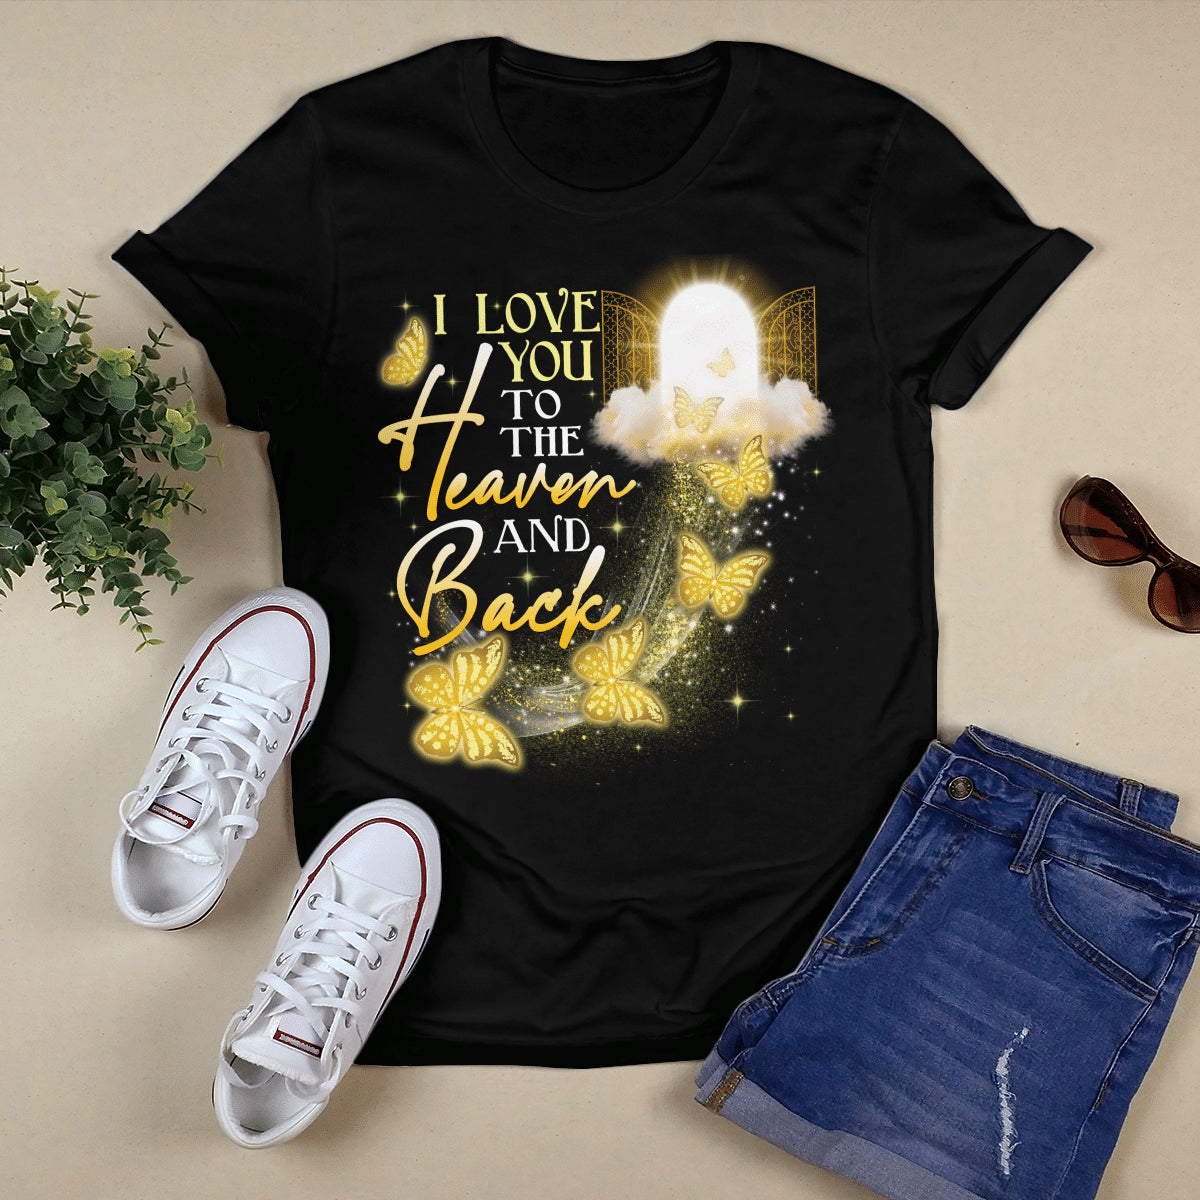 Butterfly - I Love You To The Heaven And Back T-shirt - Jesus T-Shirt - Christian Shirts For Men & Women - Ciaocustom